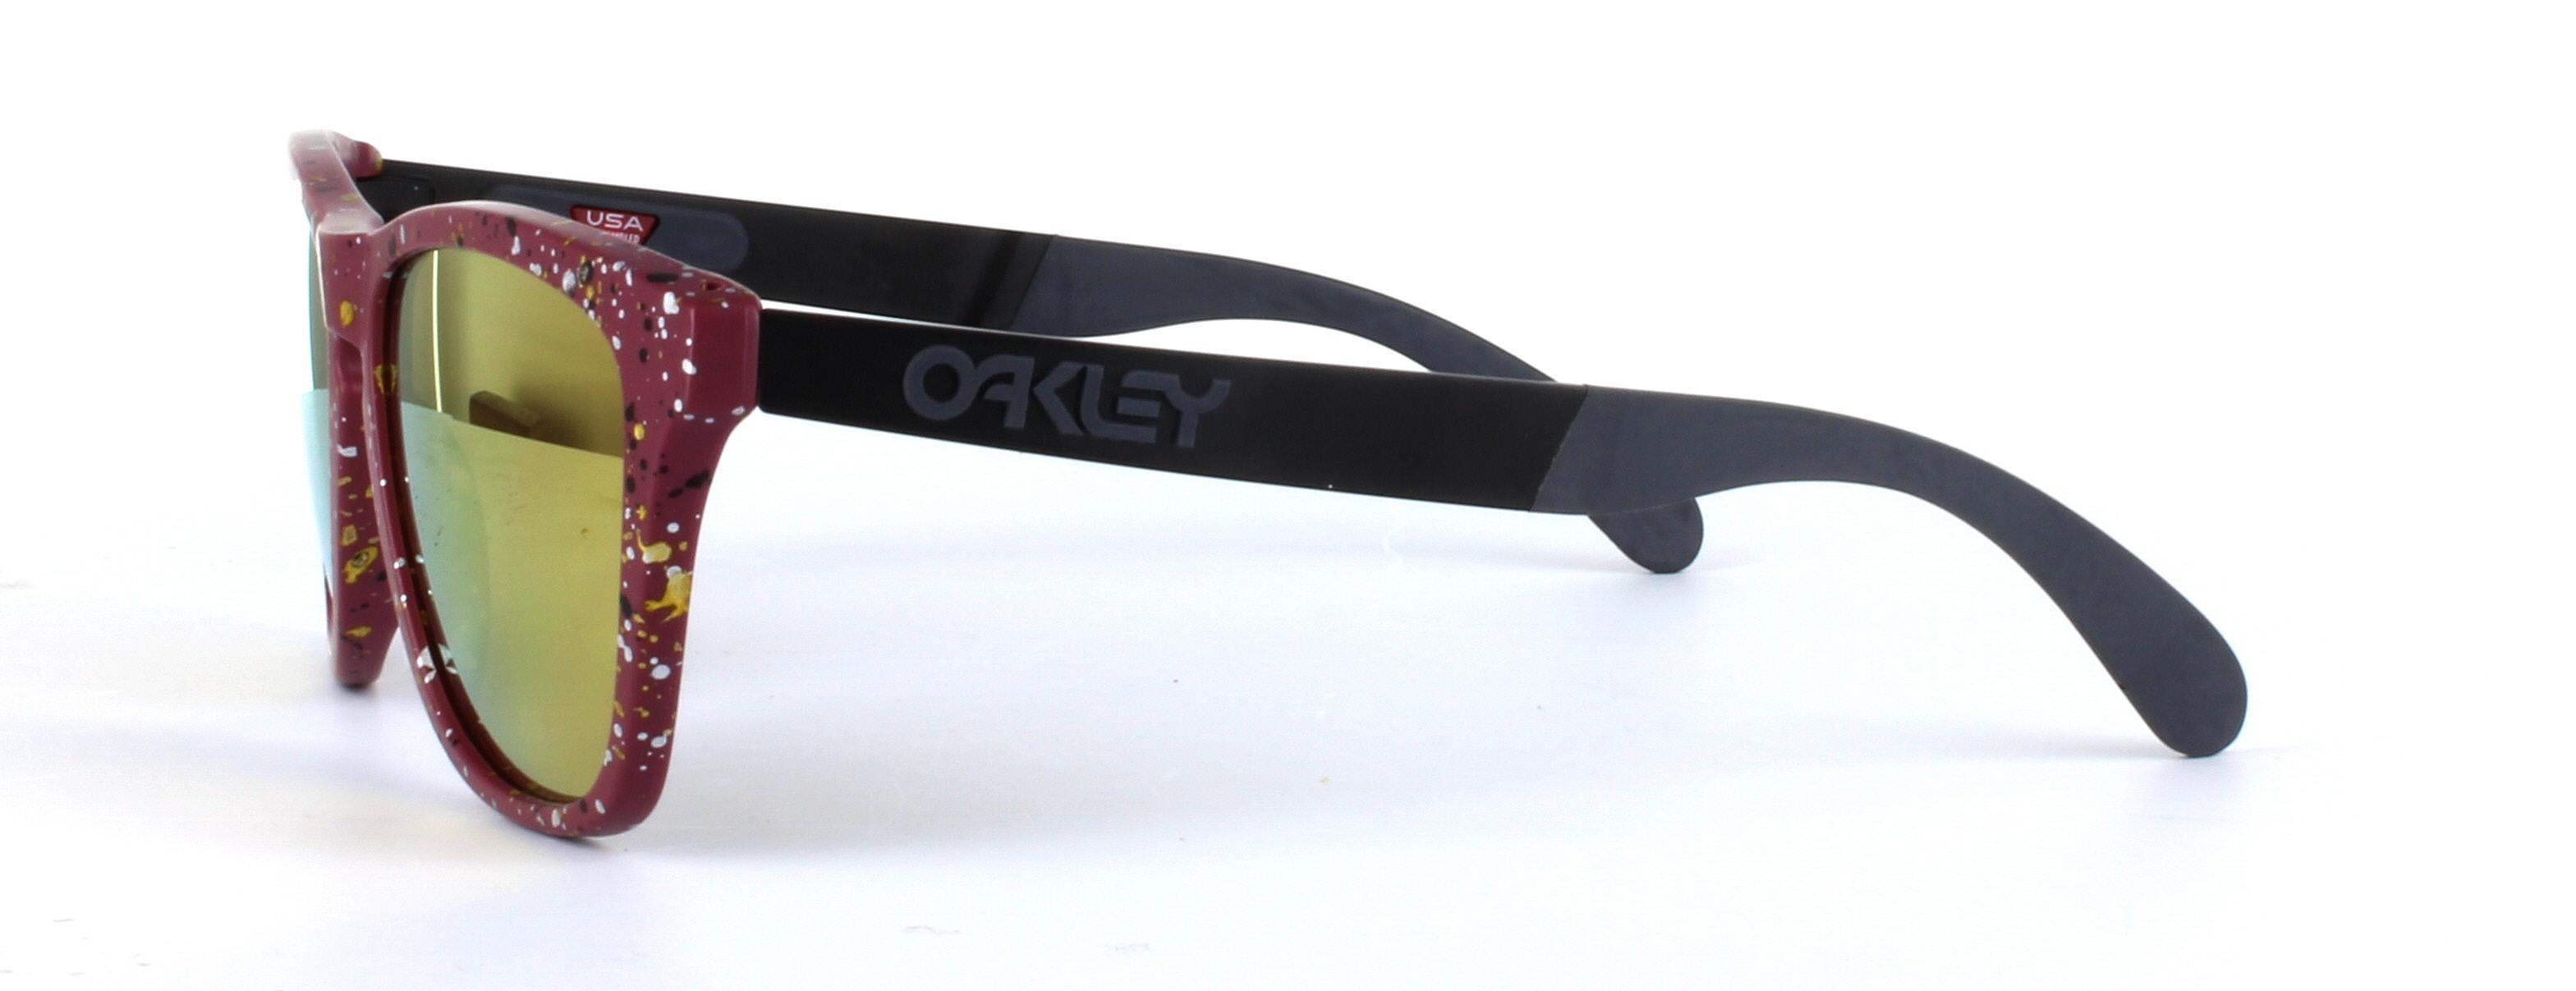 Oakley (O9428) Red Full Rim Rectangular Plastic Prescription Sunglasses - Image View 2